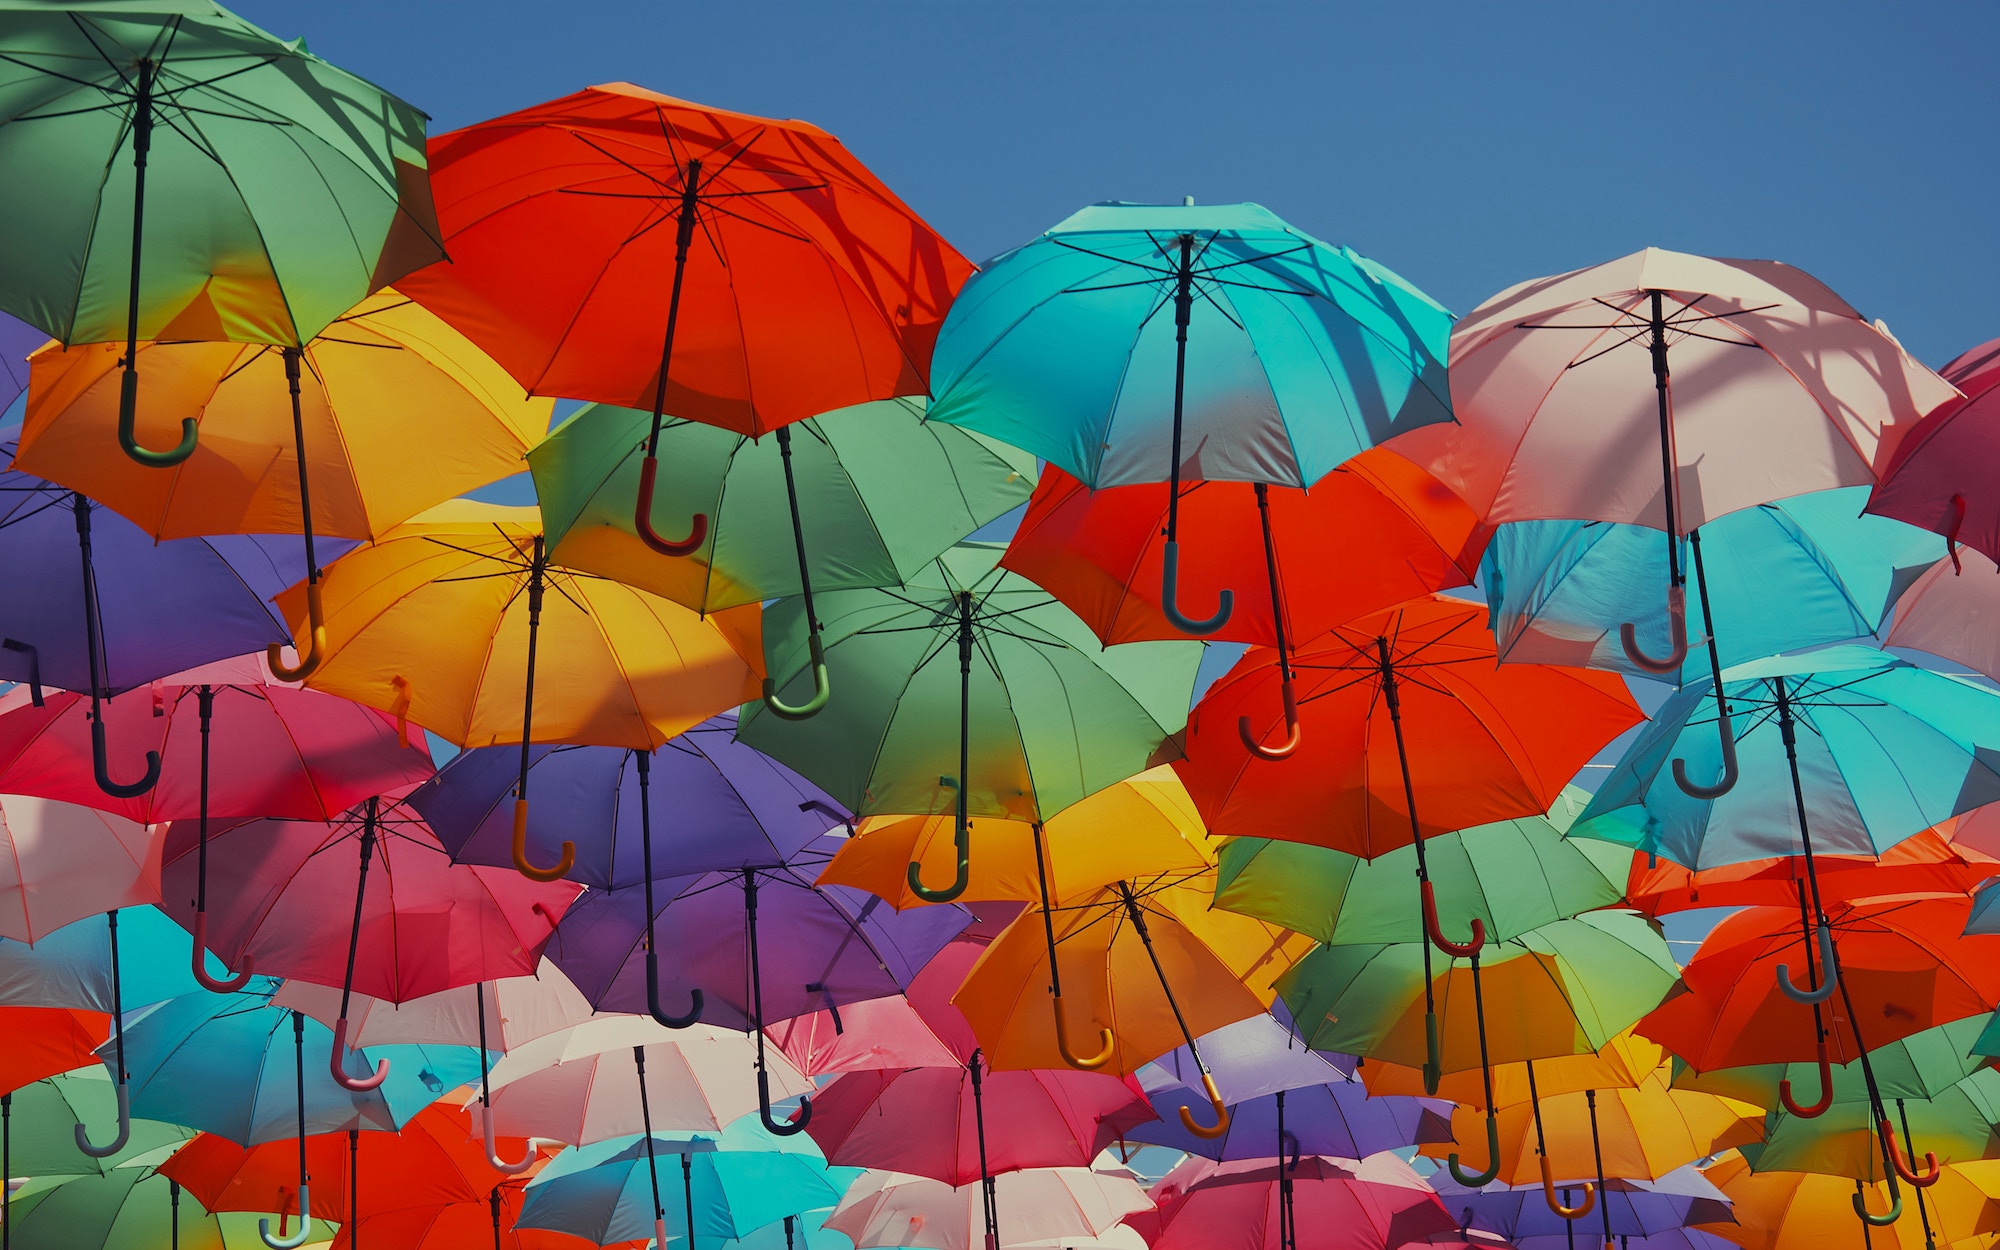 An array of colorful umbrellas